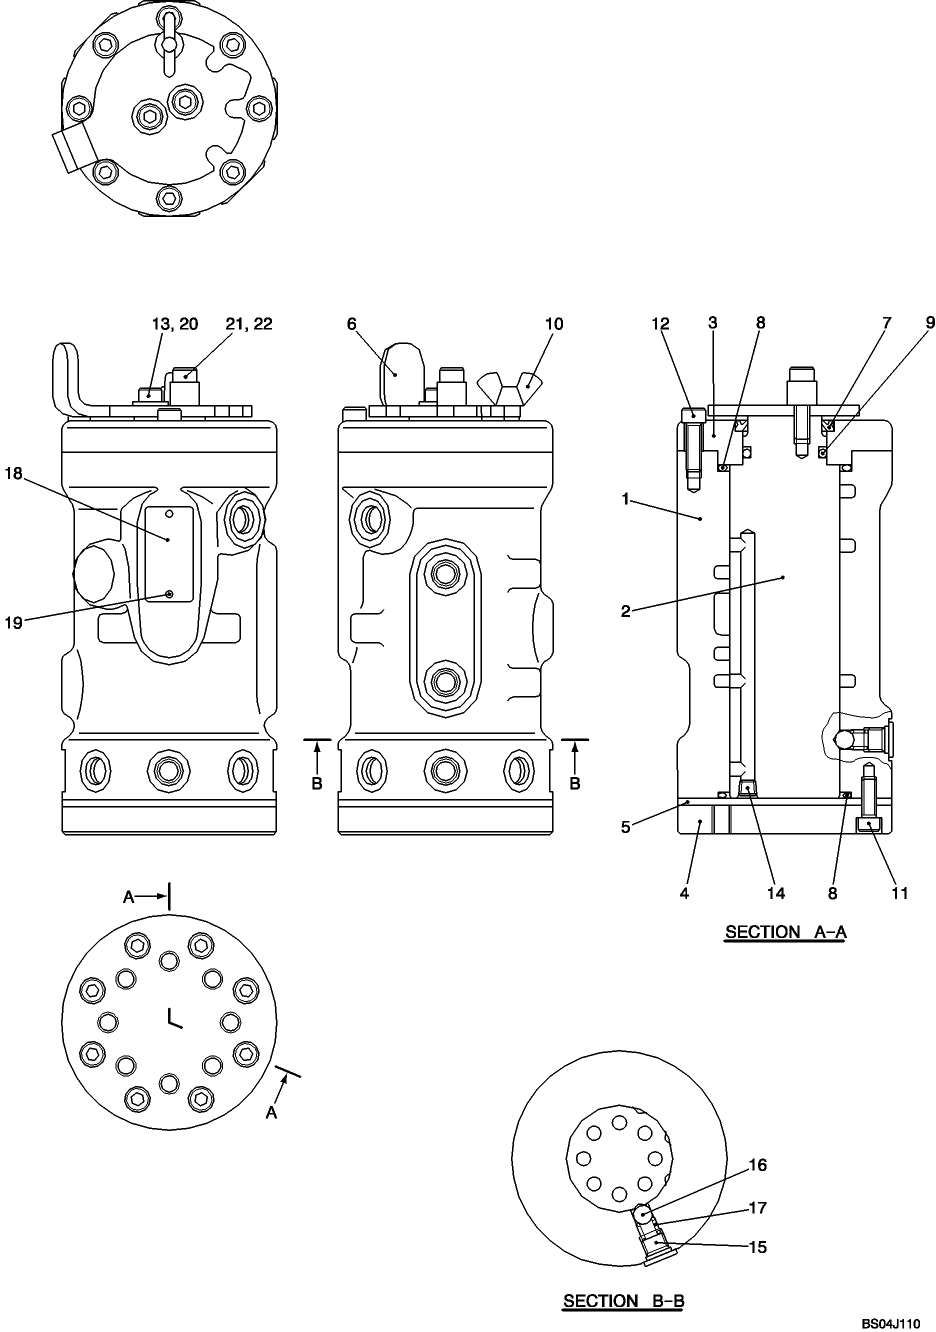 HC885-01(1) SELECTOR VALVE